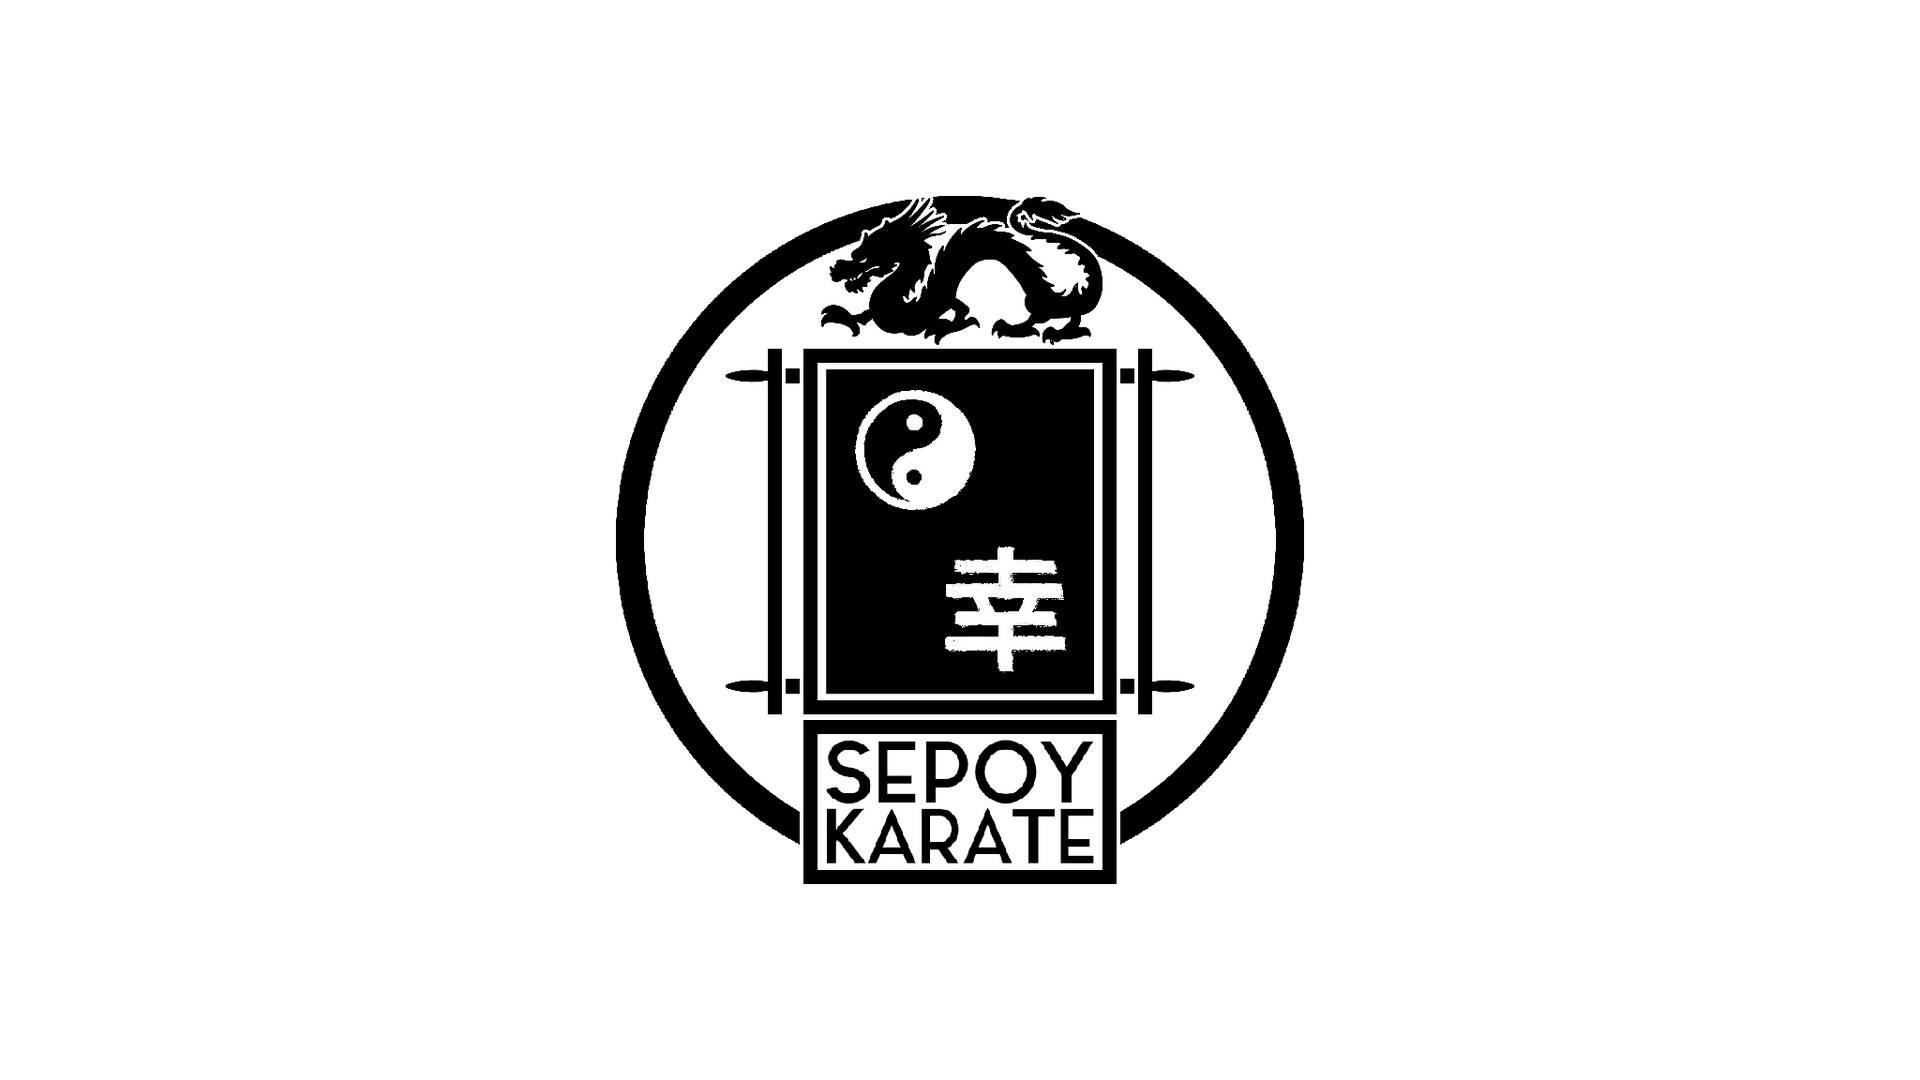 Cotton End Sepoy Karate photo